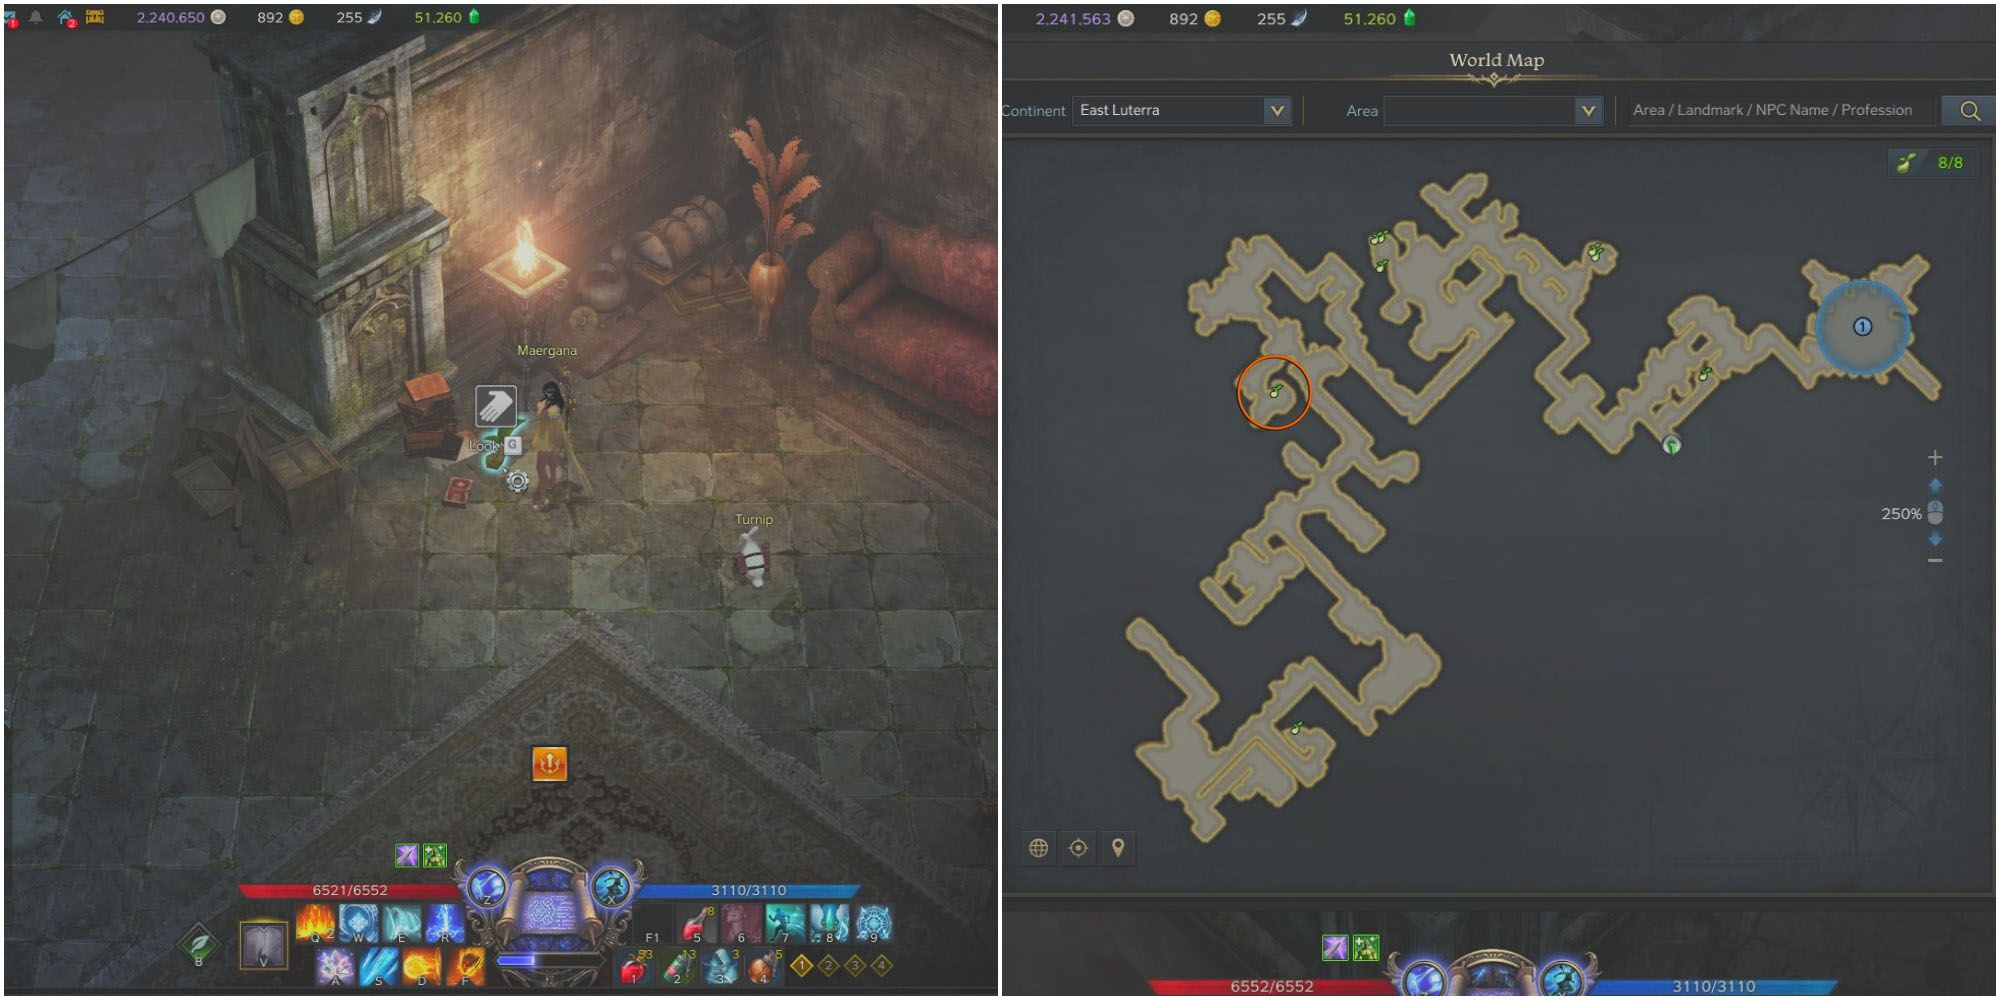 split image of player find mokoko seed 2 in blackrose basement and map of blackrose basement